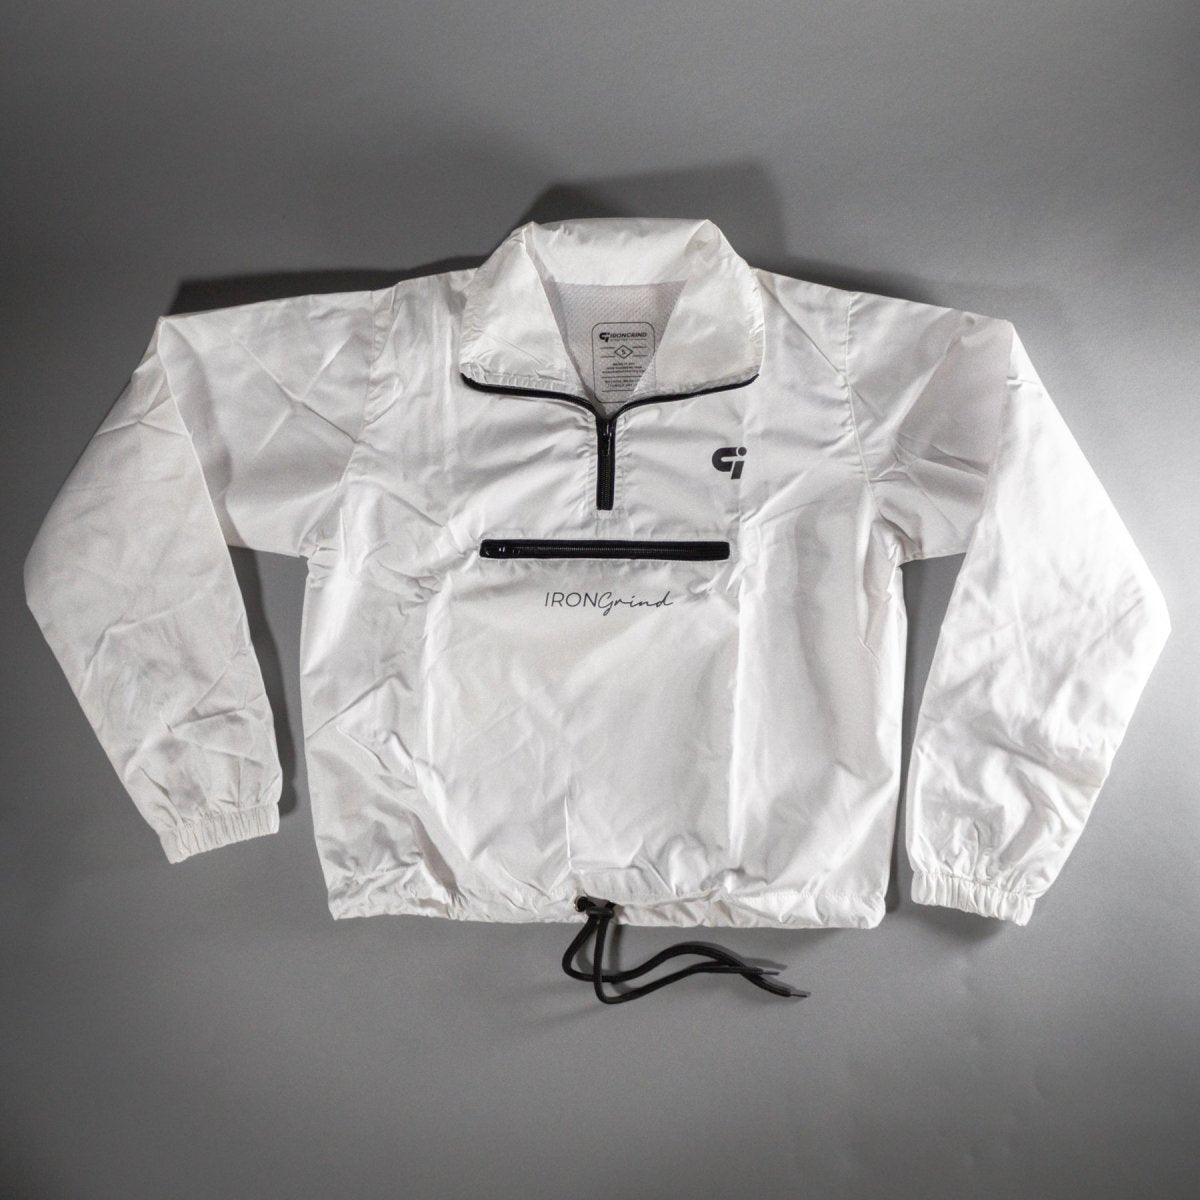 Hava Windbreaker Jacket - White - IronGrind Athletics - activewear - gymshark - alphalete